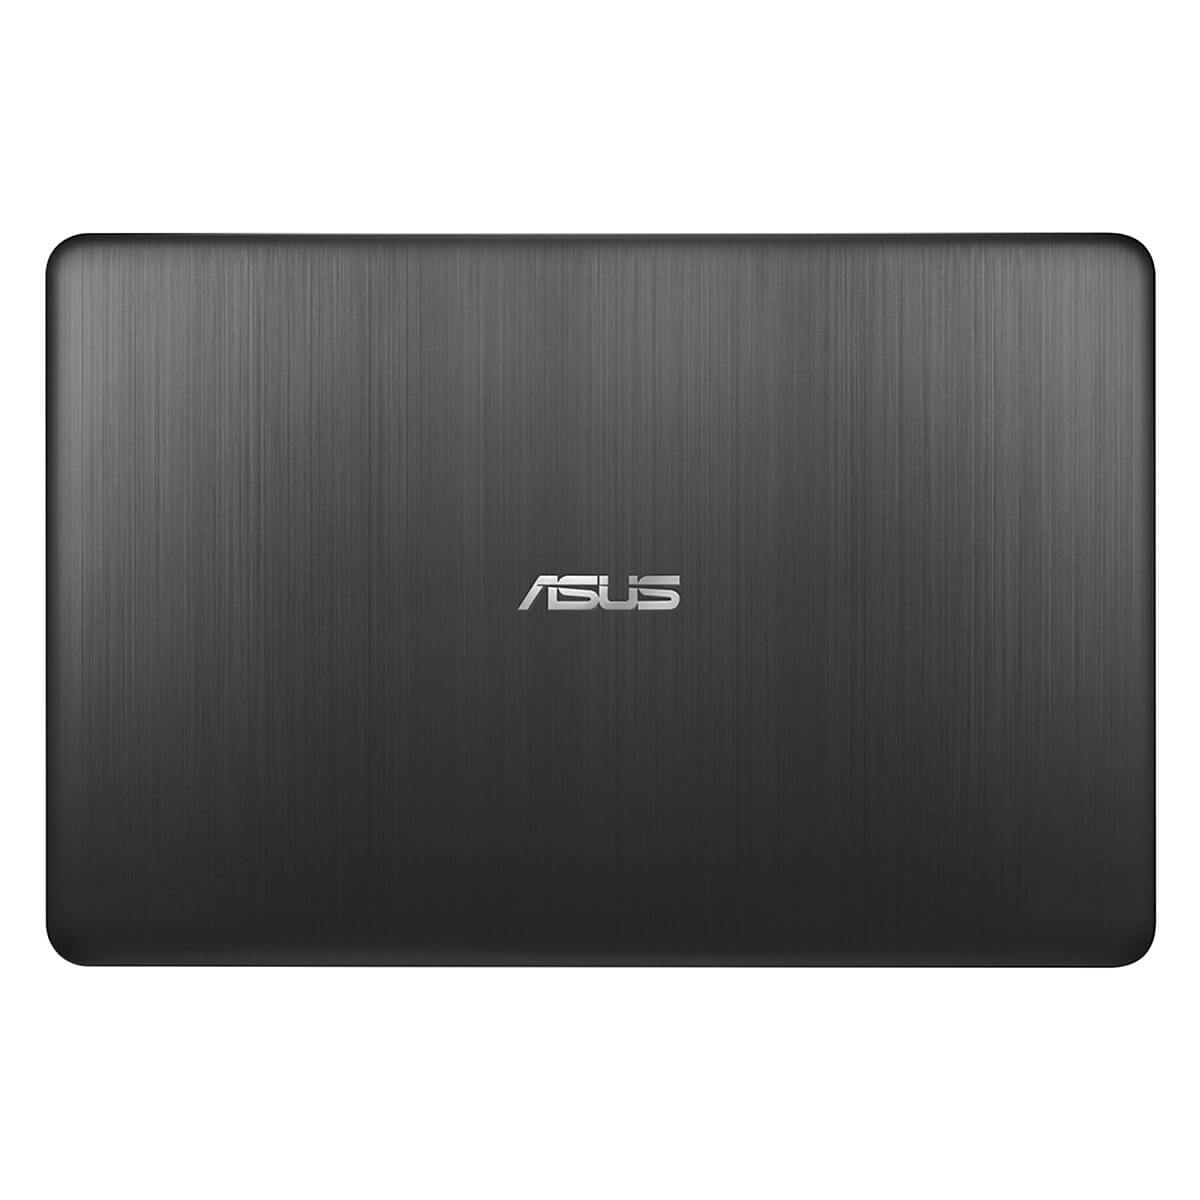 Laptop Asus X455LAB Core i3-5005U, Ram 4GB, HDD 500GB, 14 Inch HD